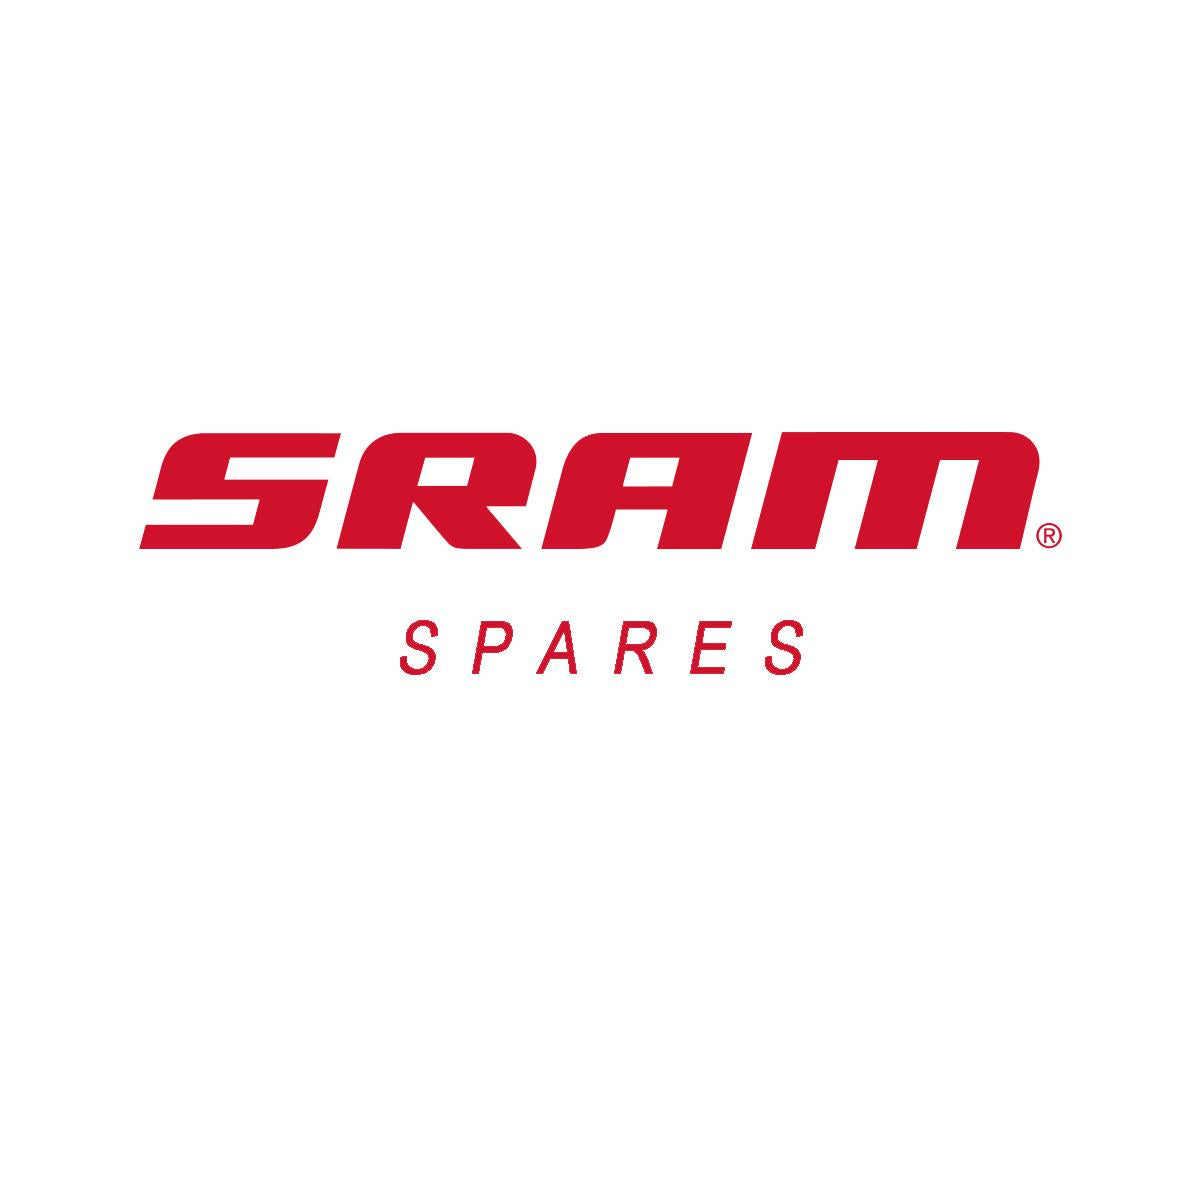 Sram Spare - Disc Brake Service Lever Internals Gen 2 Guide Rsc/ultimate/code Rsc Qty 1